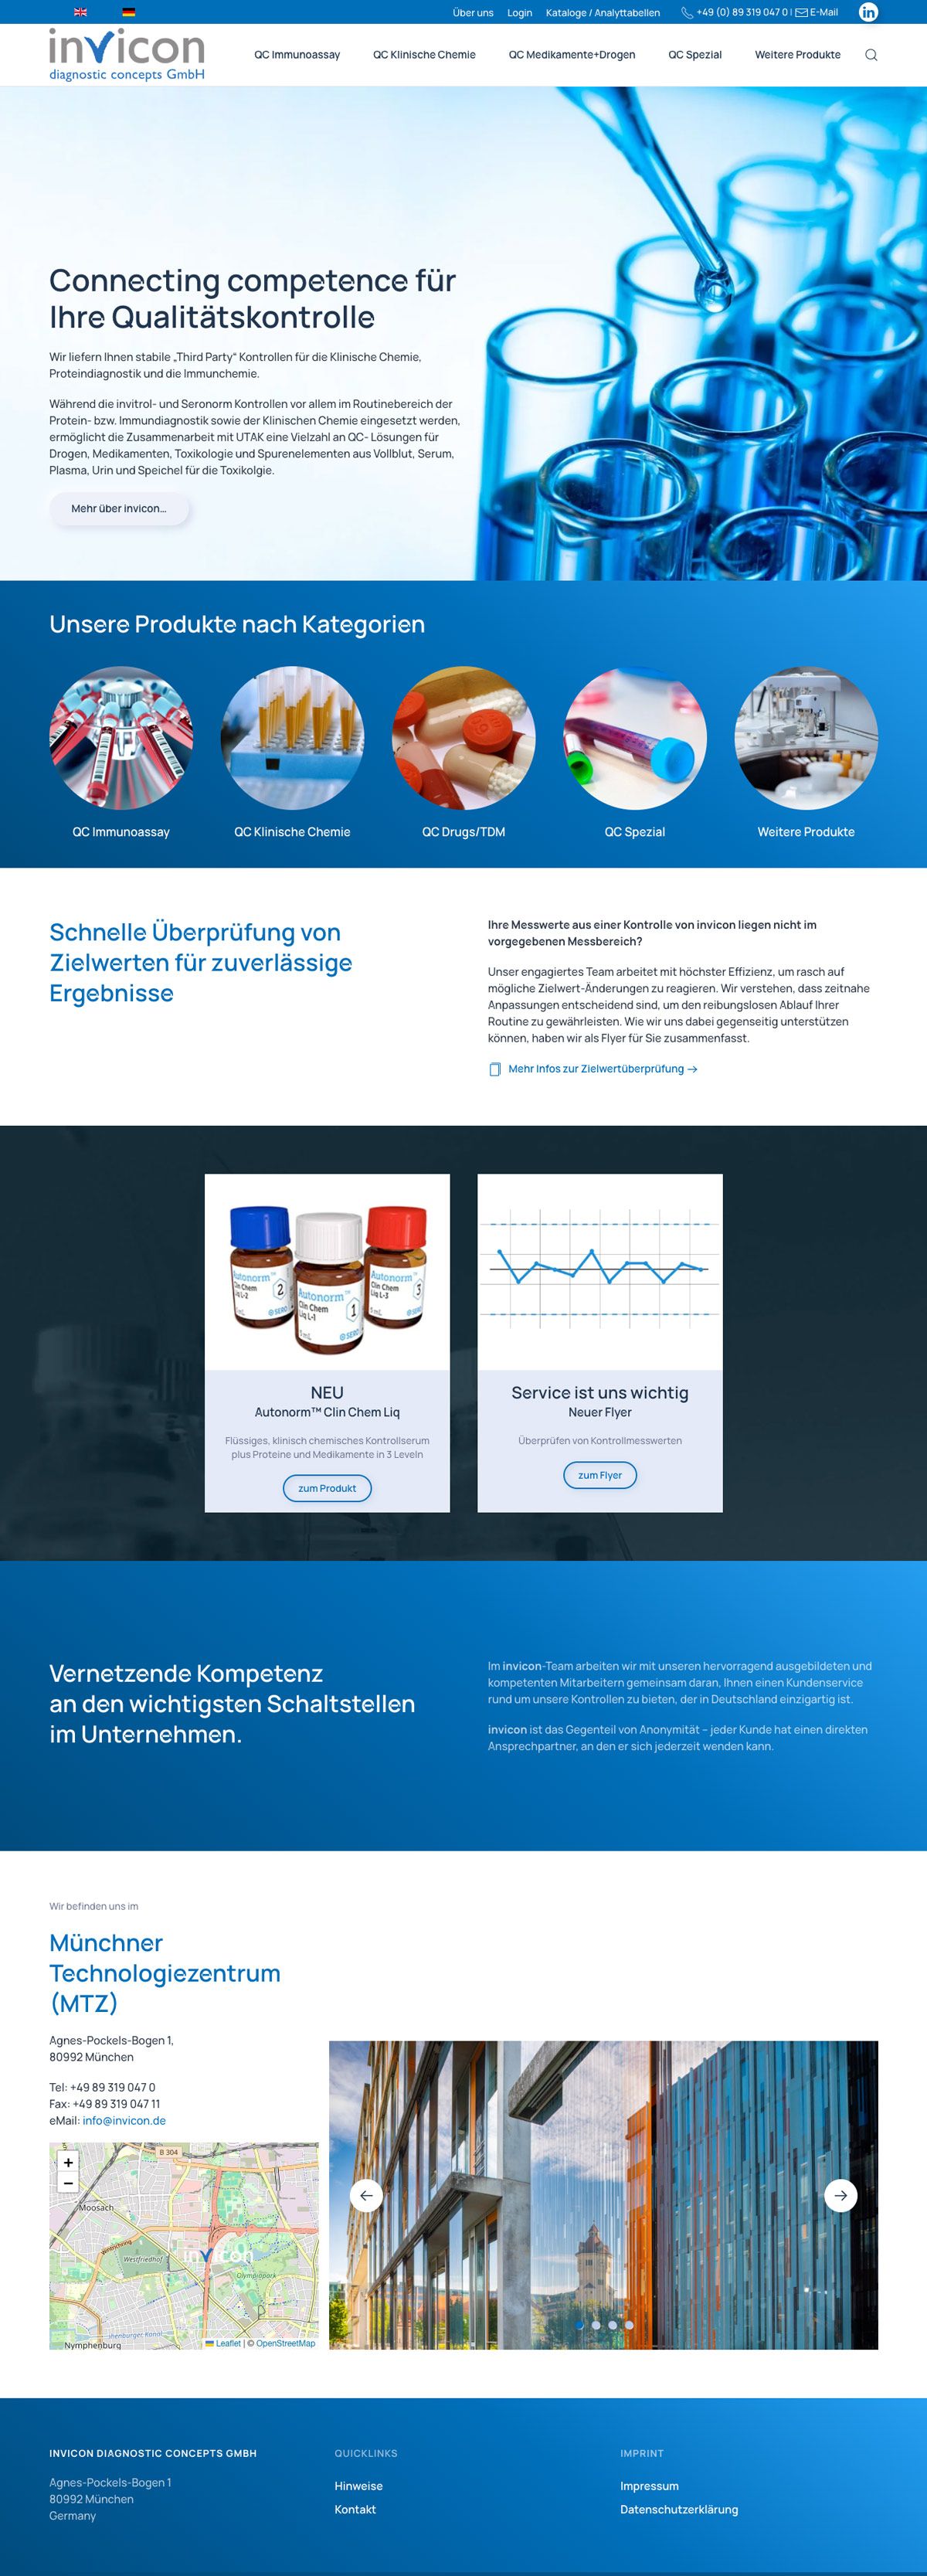 Invicon diagnostic concepts Startseite mit Produktkategorien